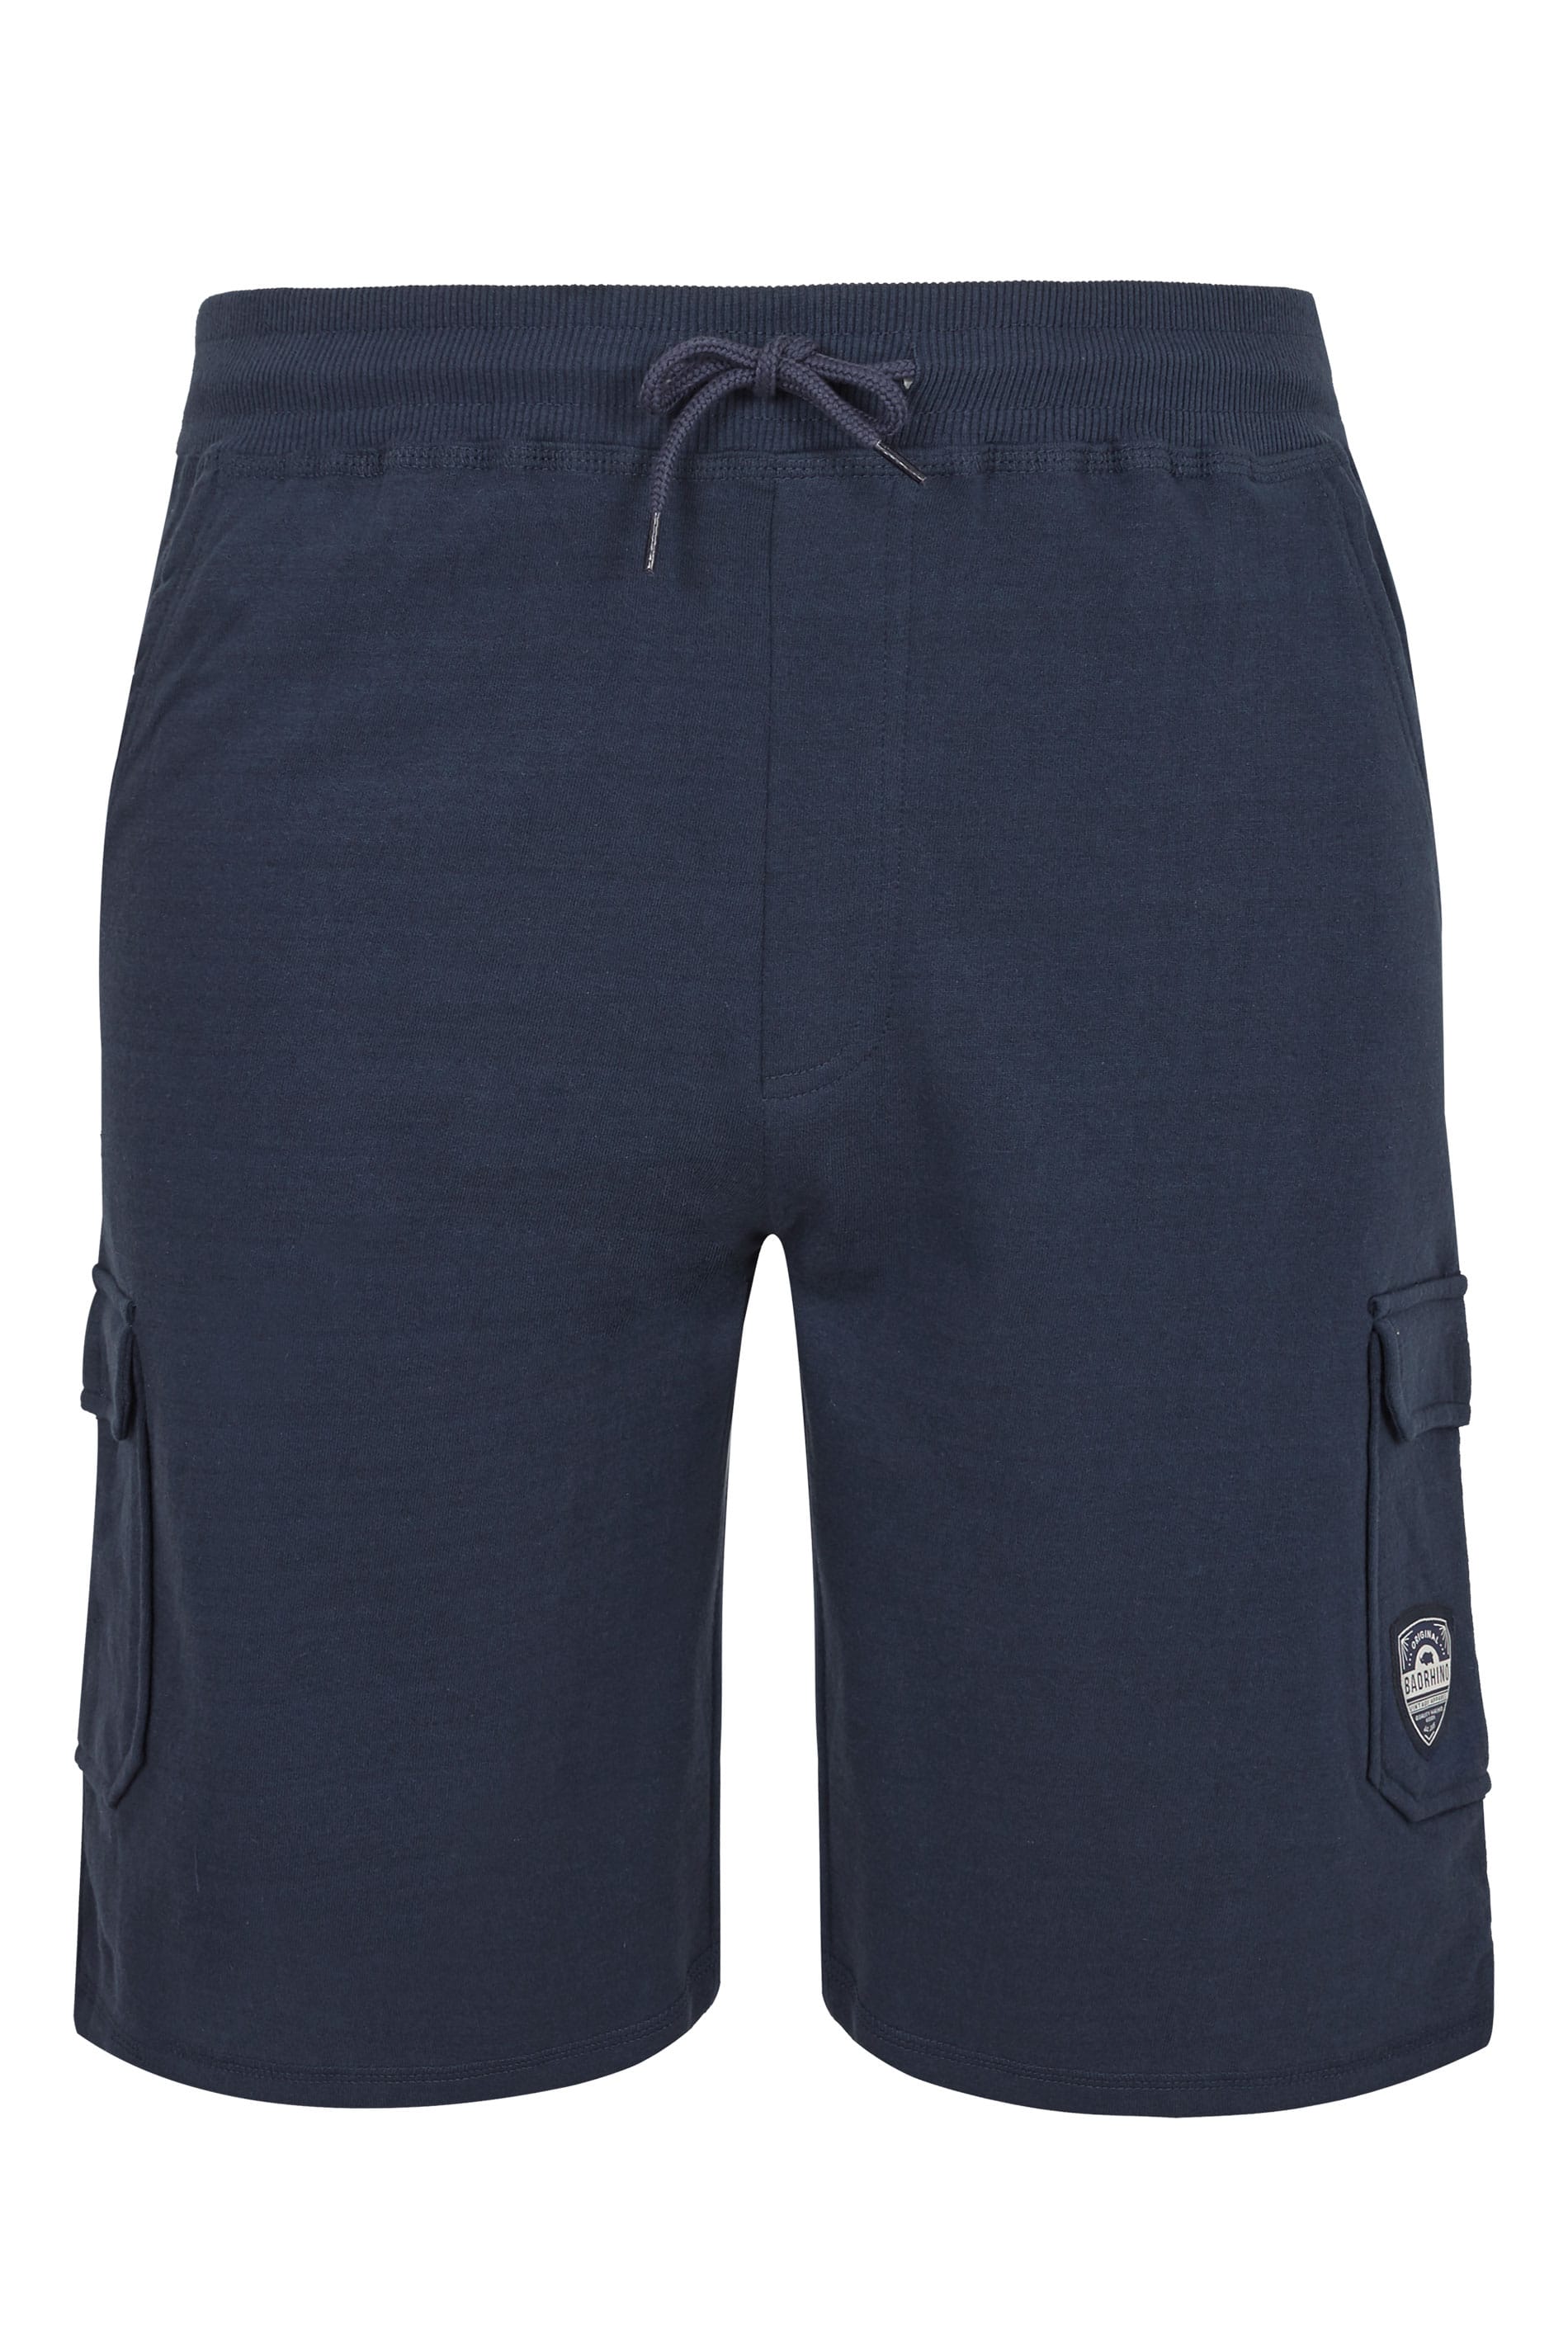 BadRhino Navy Cargo Jersey Shorts | Big Sizes M to 8XL | BadRhino ...